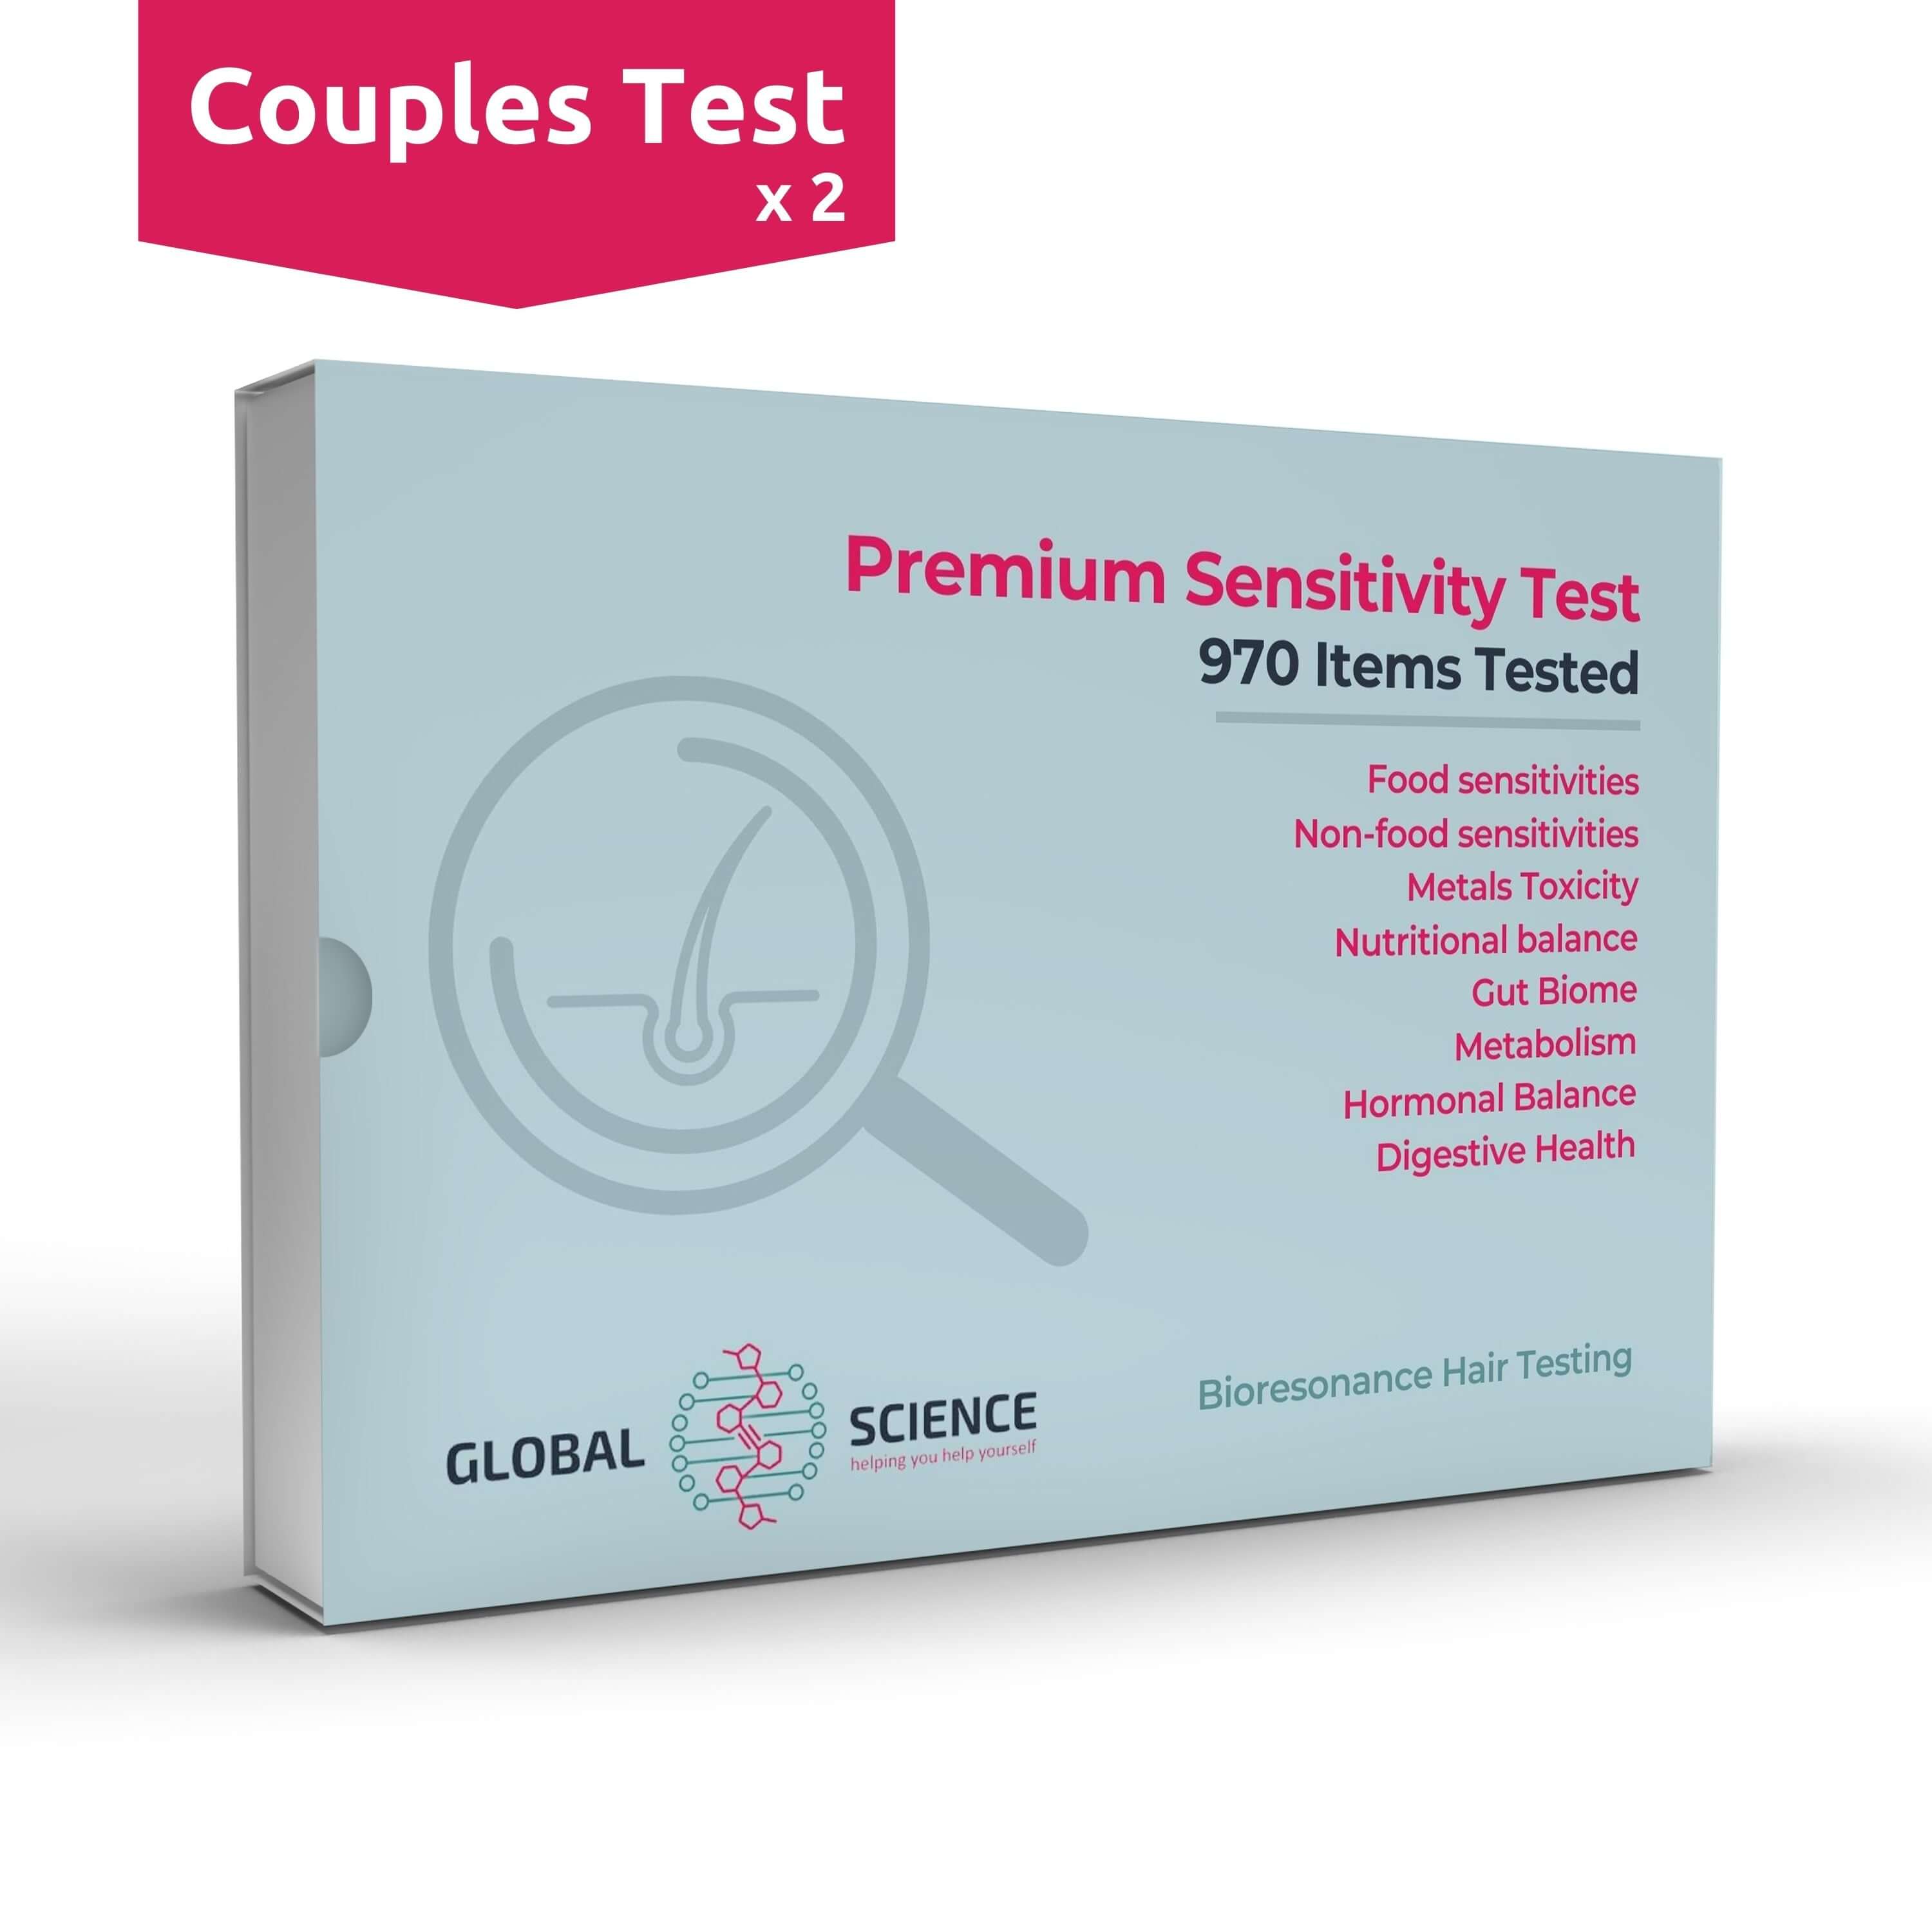 Premium Sensitivity 970 Mock Up Kit Couples - How allergy testing works